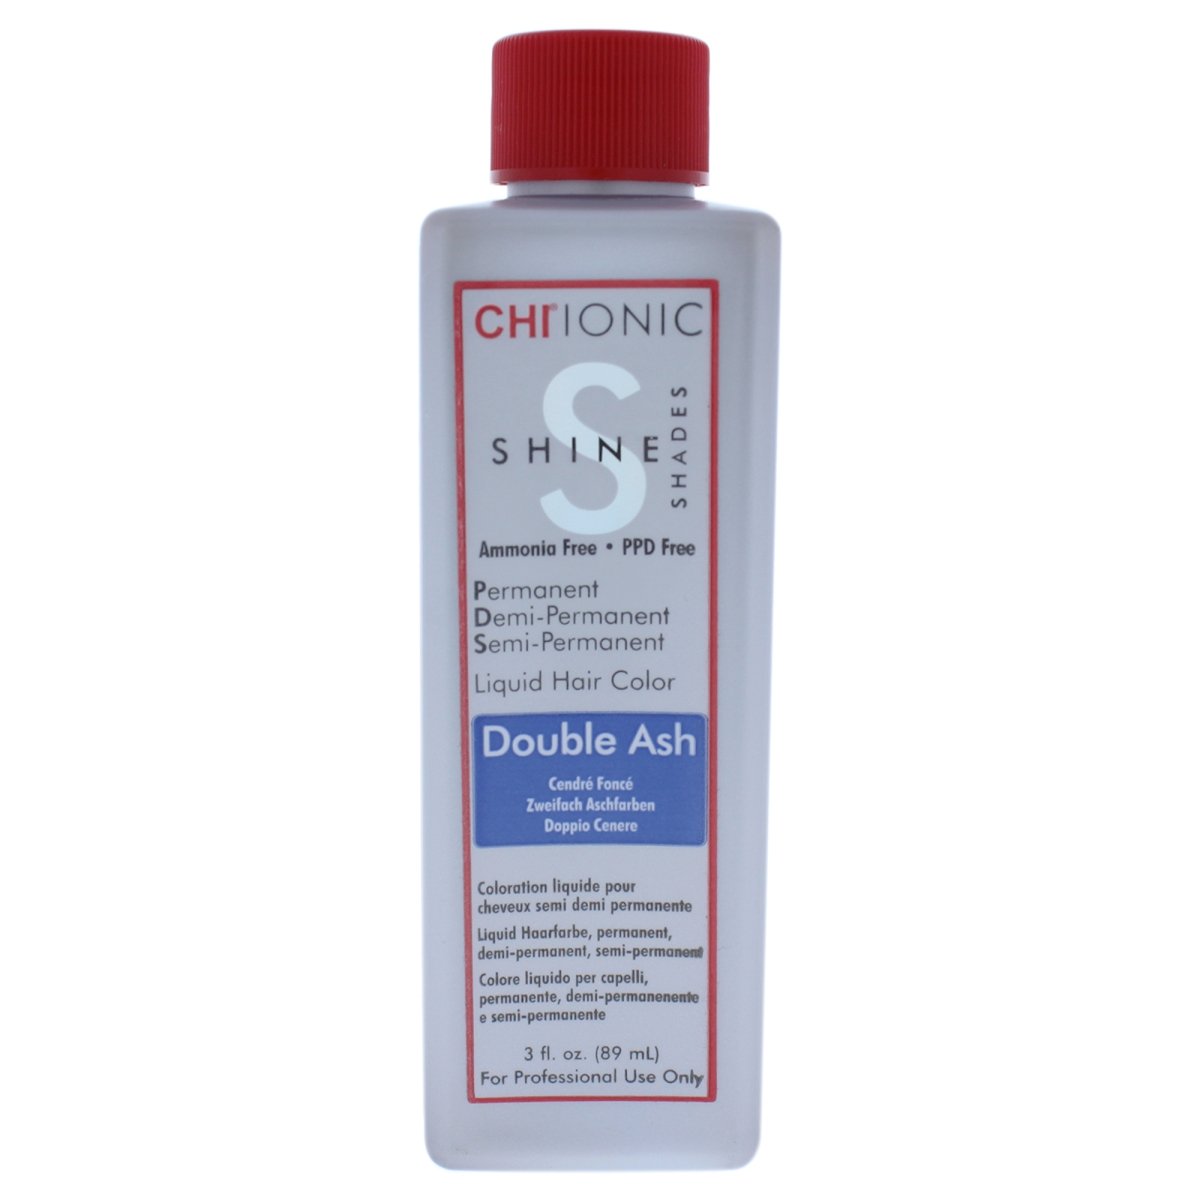 I0084060 Ionic Shine Shades Liquid Hair Color For Unisex - Double Ash - 3 Oz